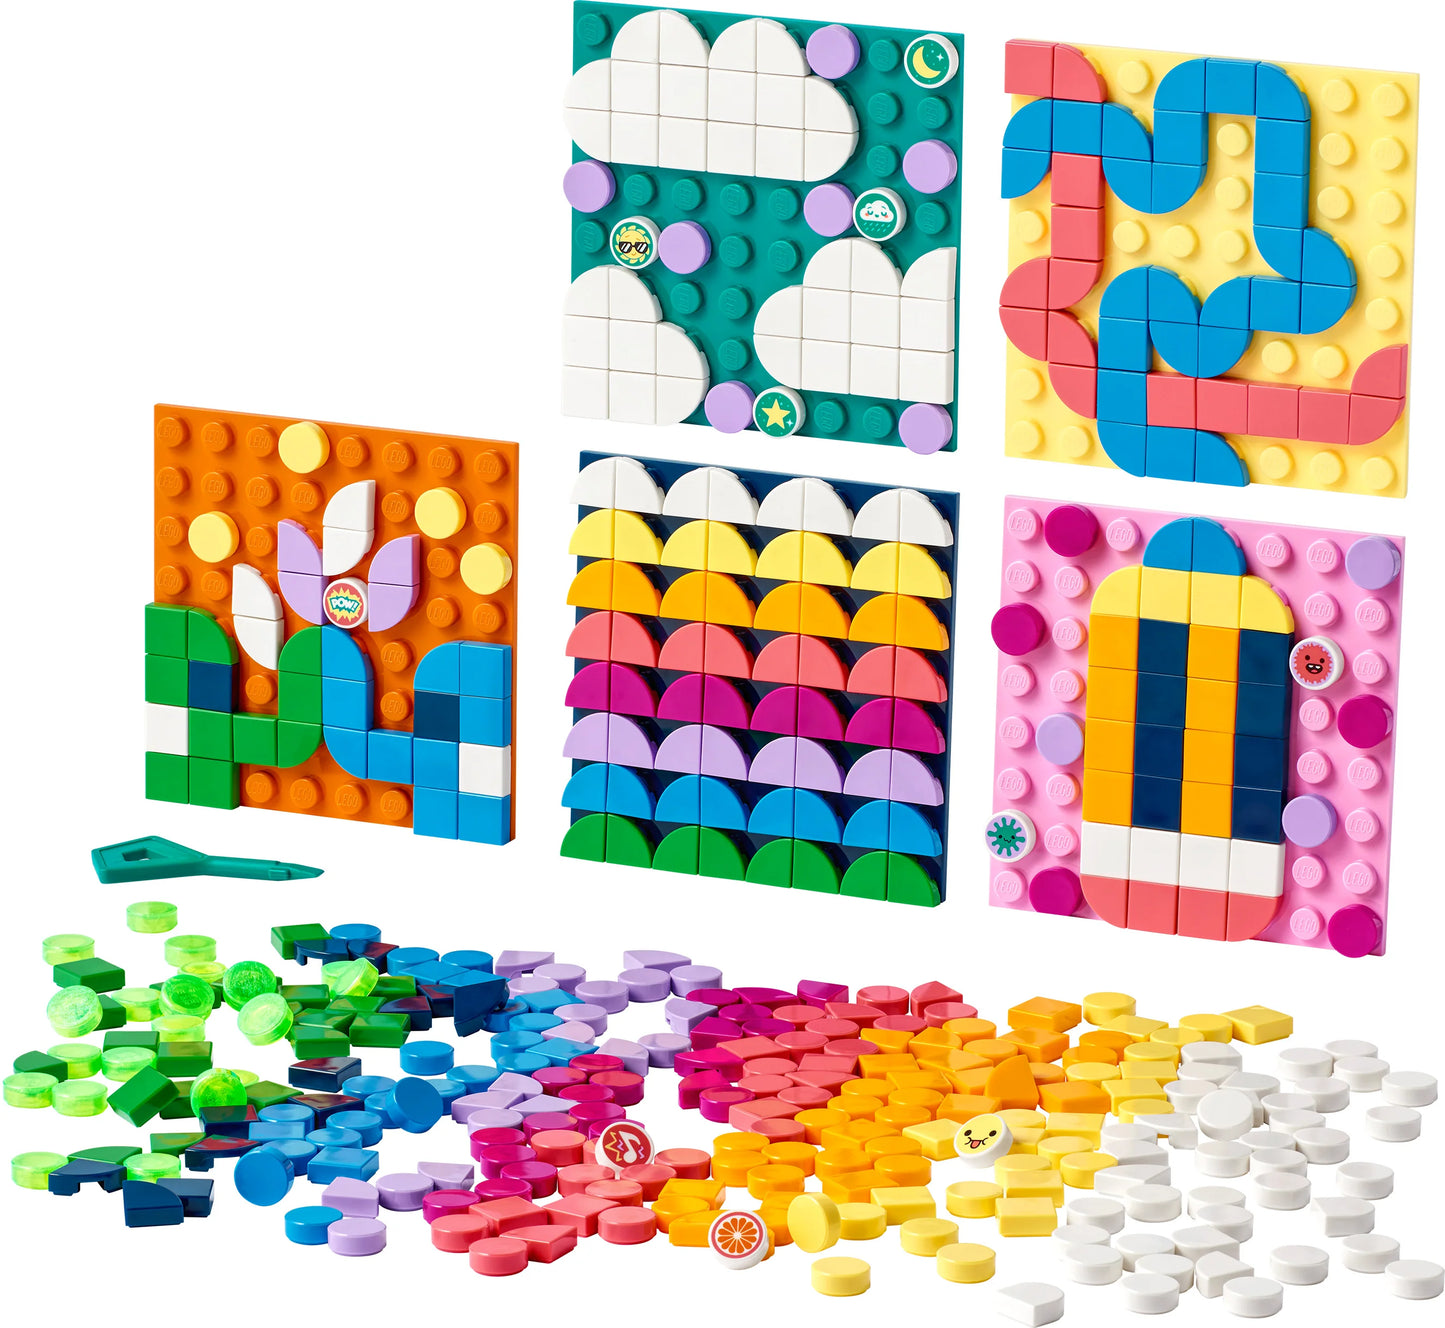 Adhesive Patches Megaset - LEGO Dots